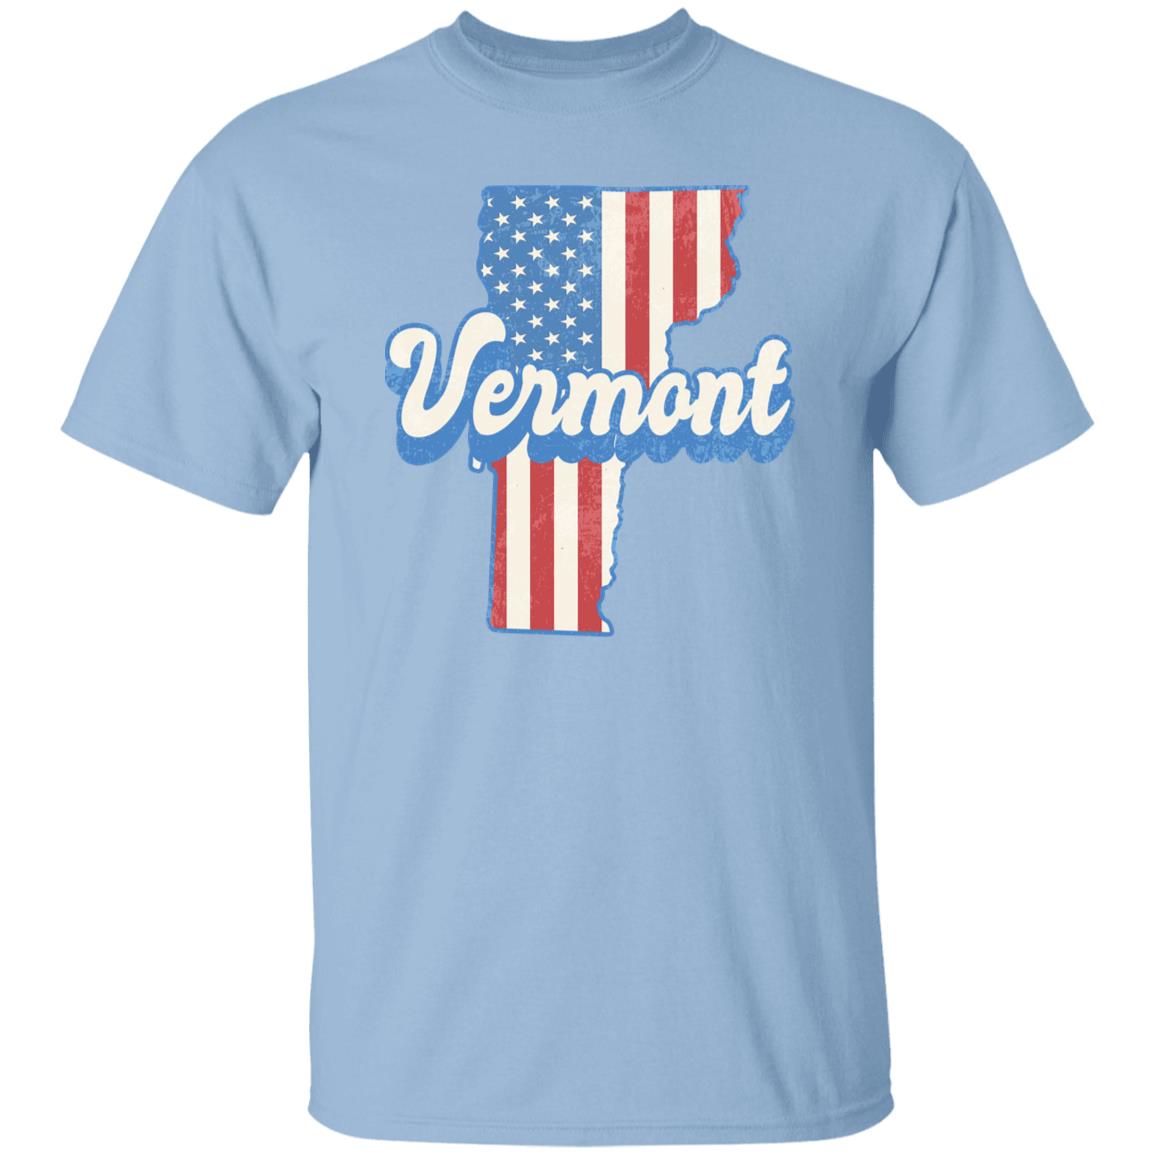 Vermont US flag Unisex T-Shirt American patriotic VT state tee White Ash Blue-Light Blue-Family-Gift-Planet